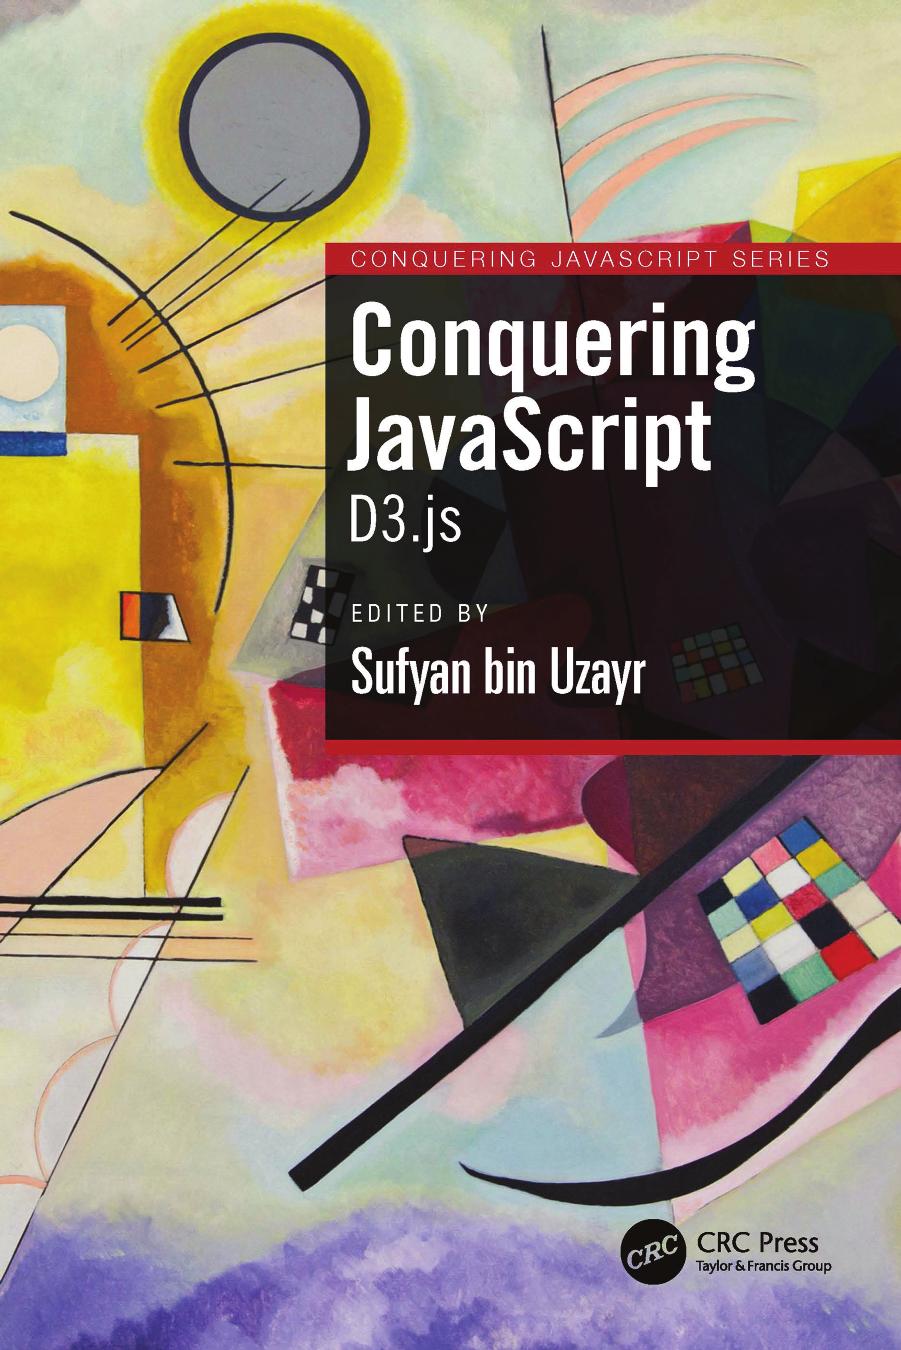 Conquering JavaScript: D3.js by Sufyan bin Uzayr